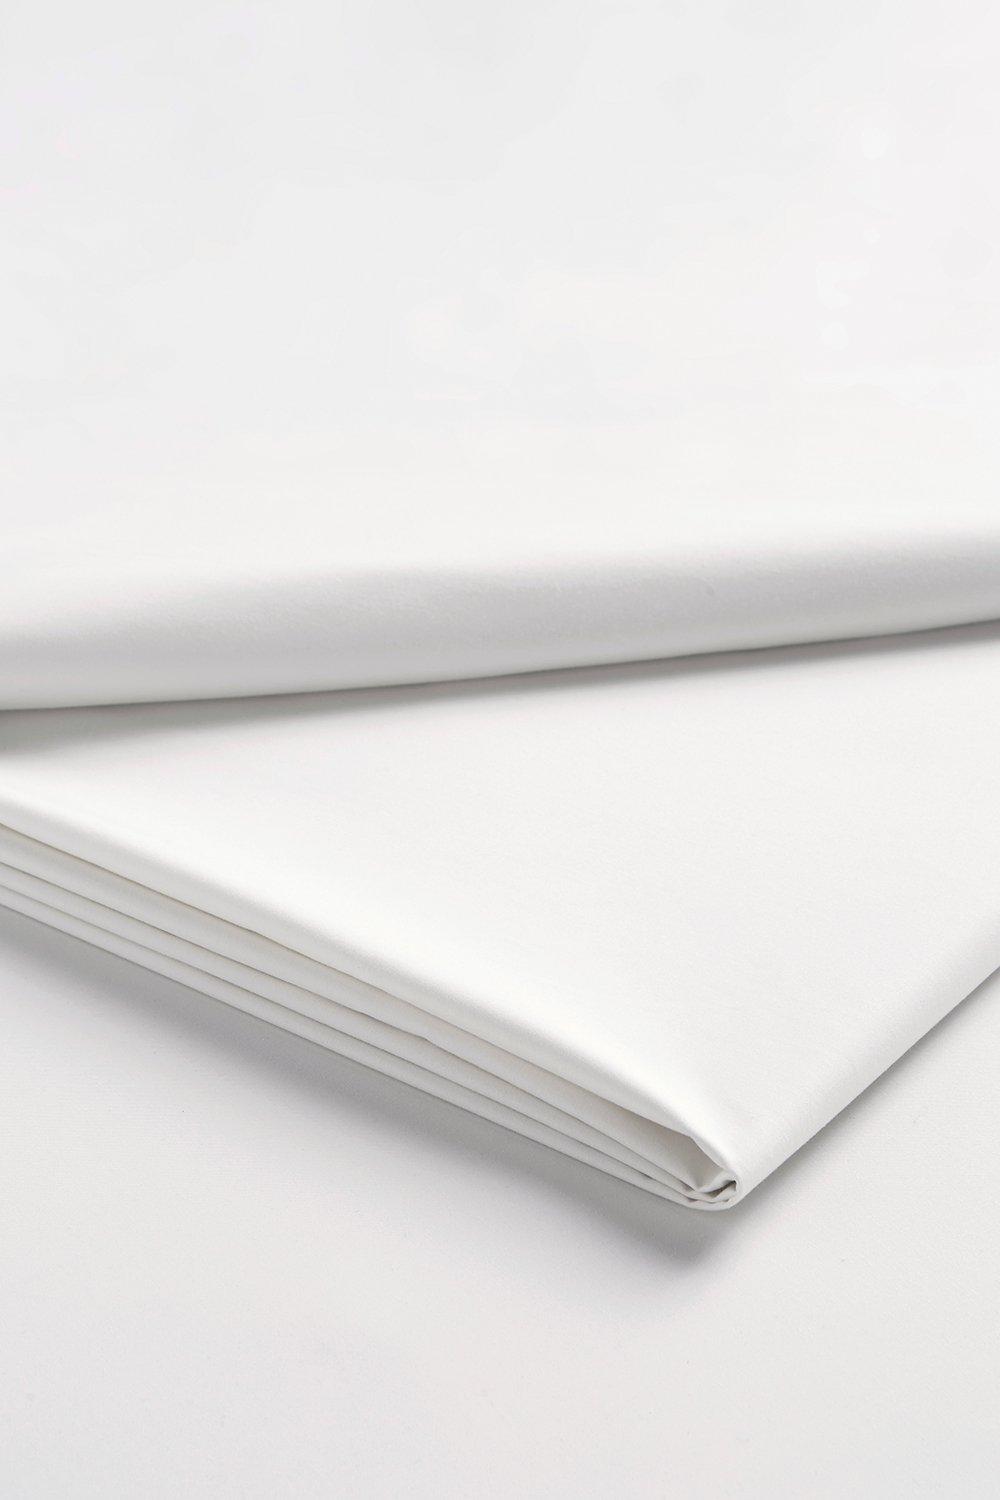 Christy 400TC Luxury Cotton Sateen Plain Dye Bedding Flat Sheets